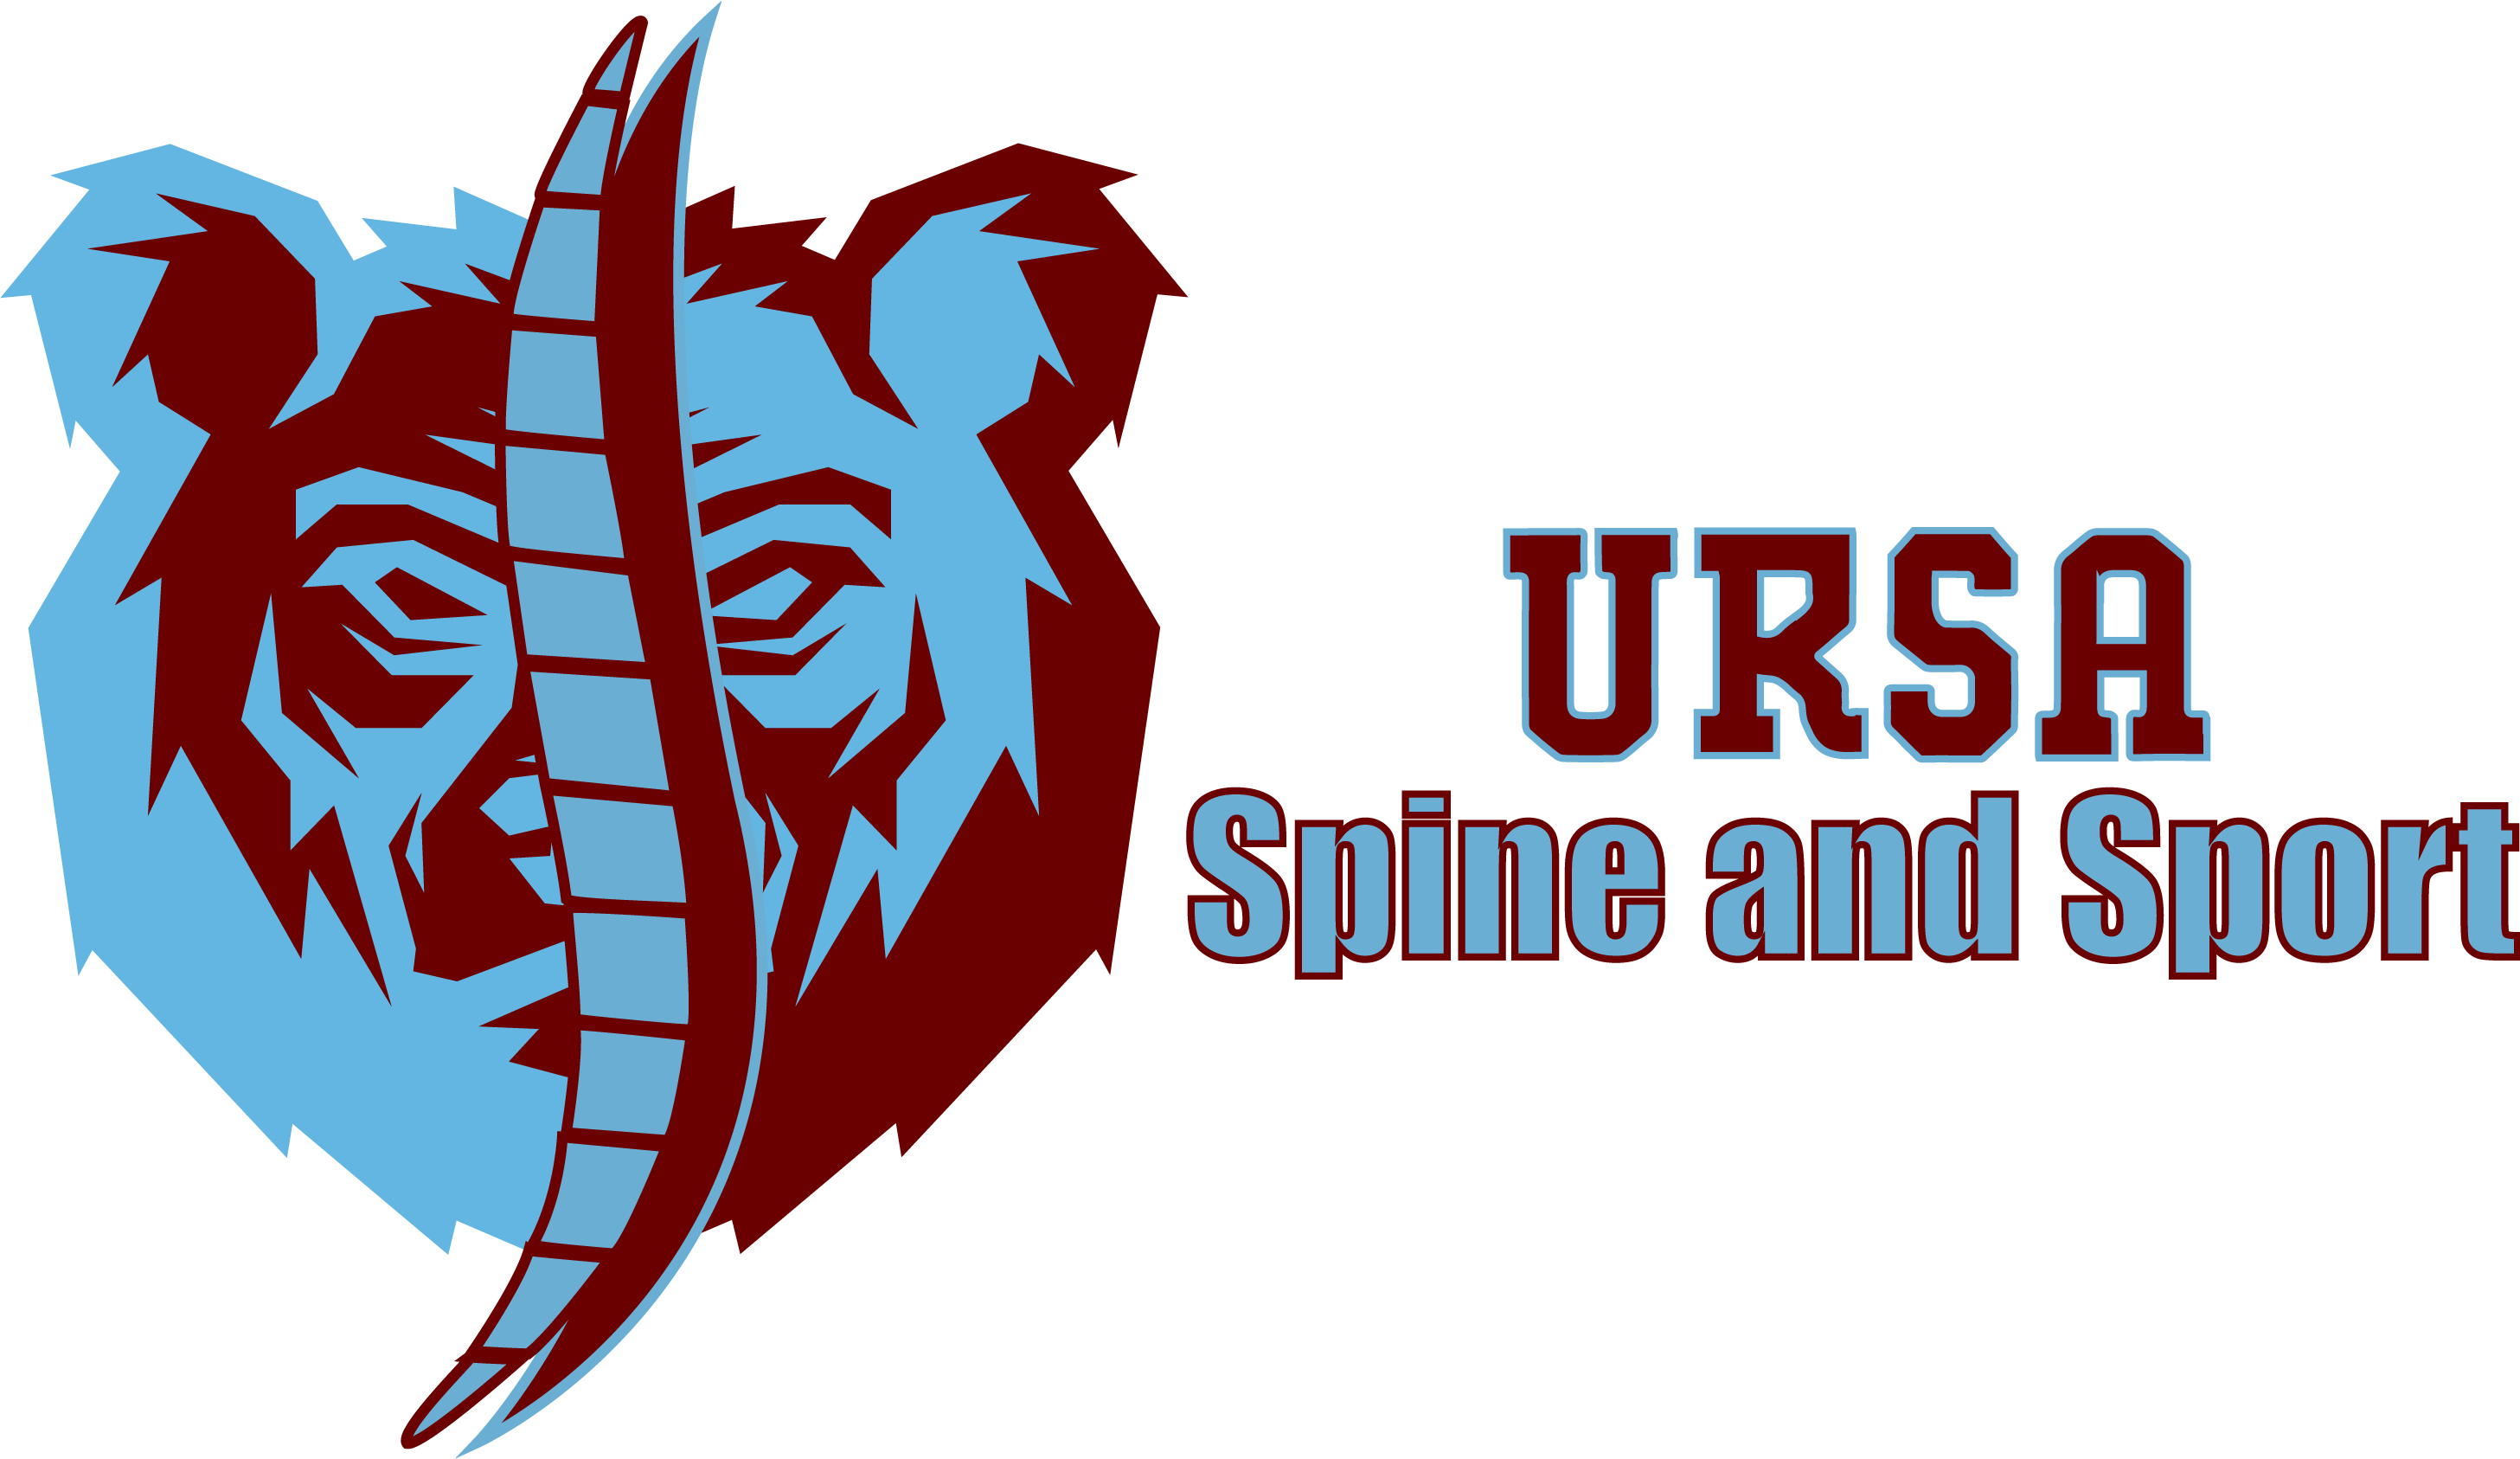 Ursa Spine and Sport